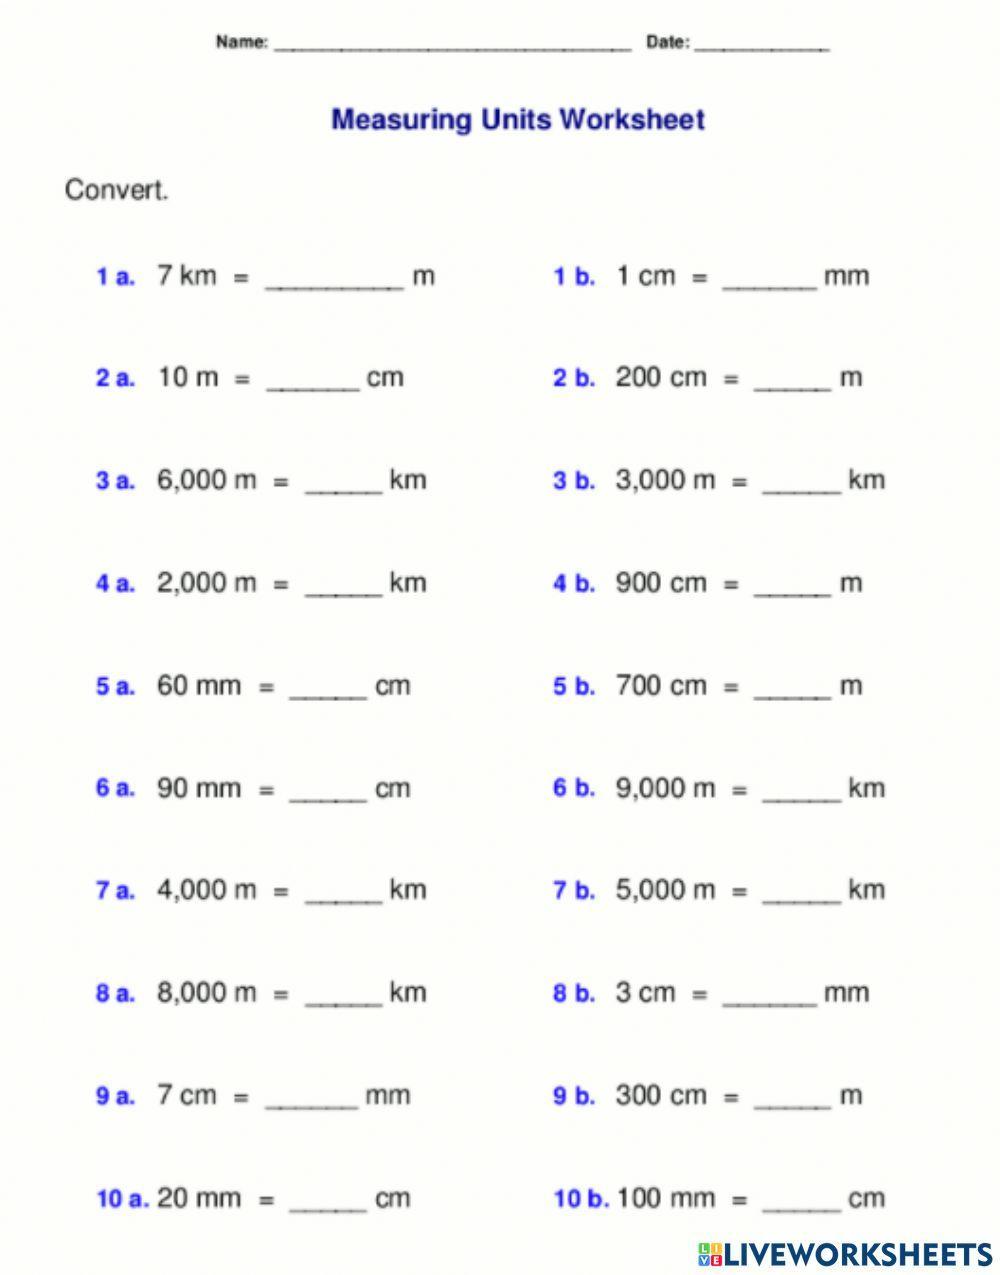 Conversion of metric units